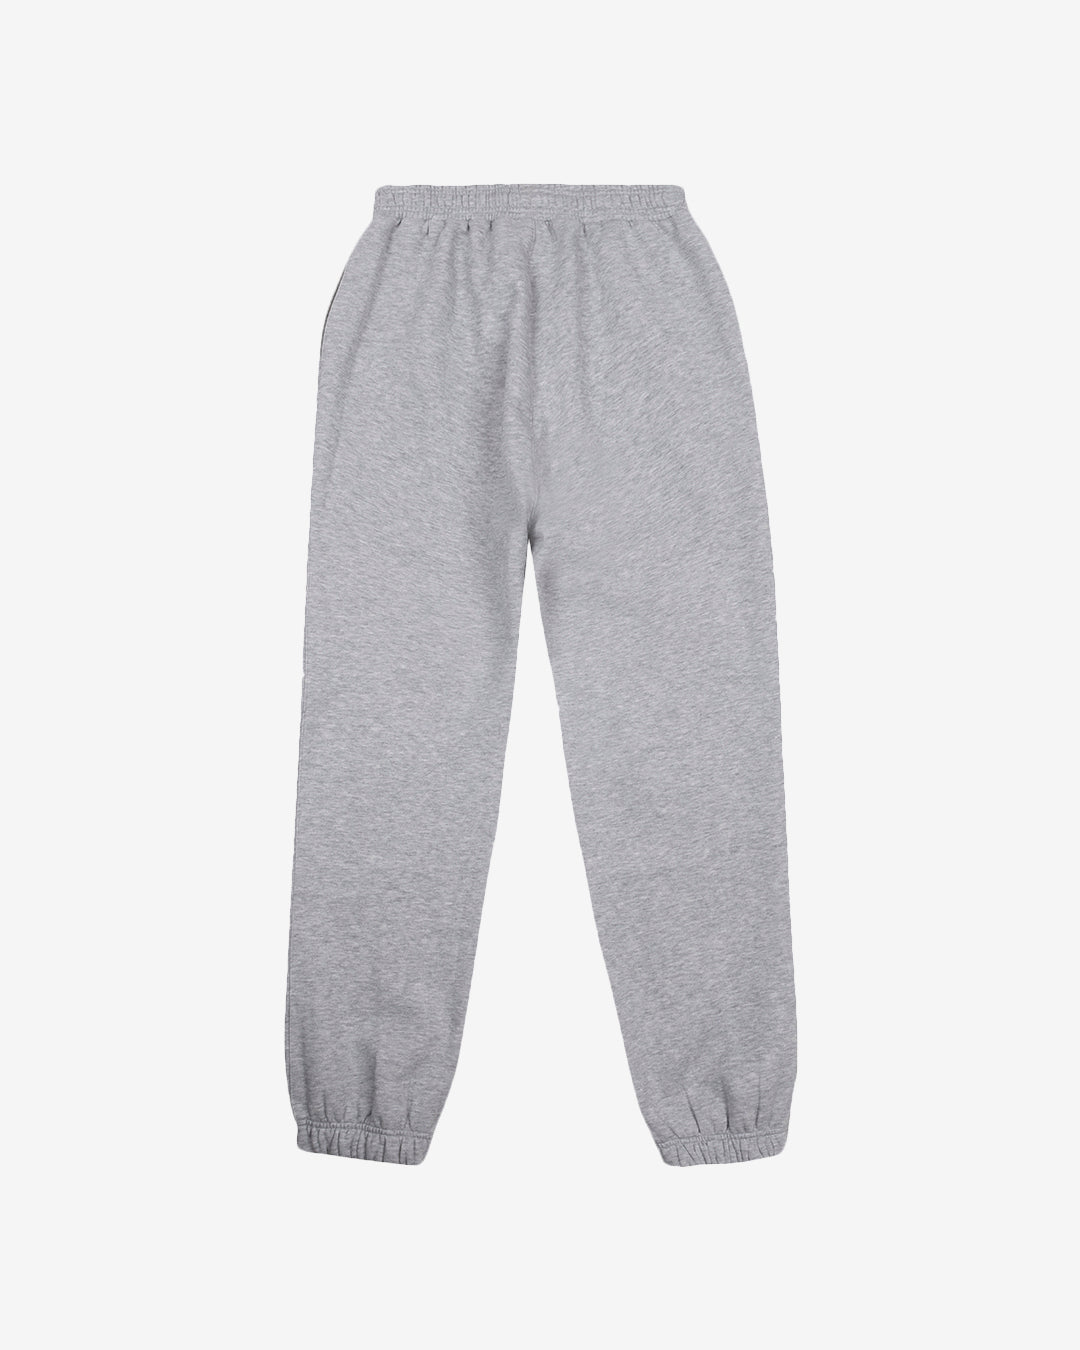 PFC: 002-4 - Women's Sweatpants - Grey Marl